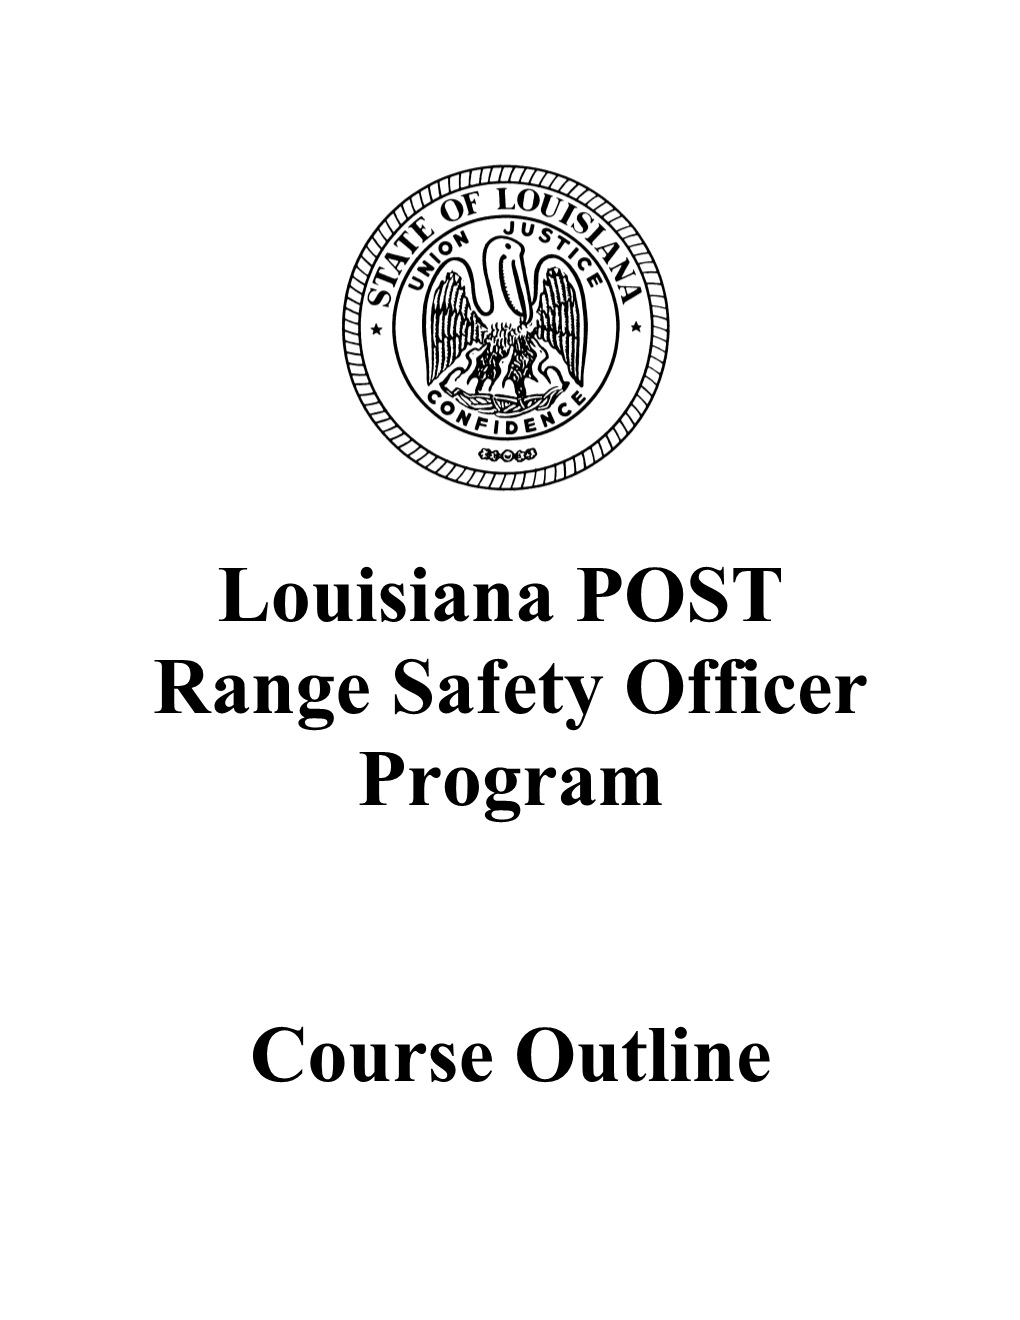 Range Safety Officer Program